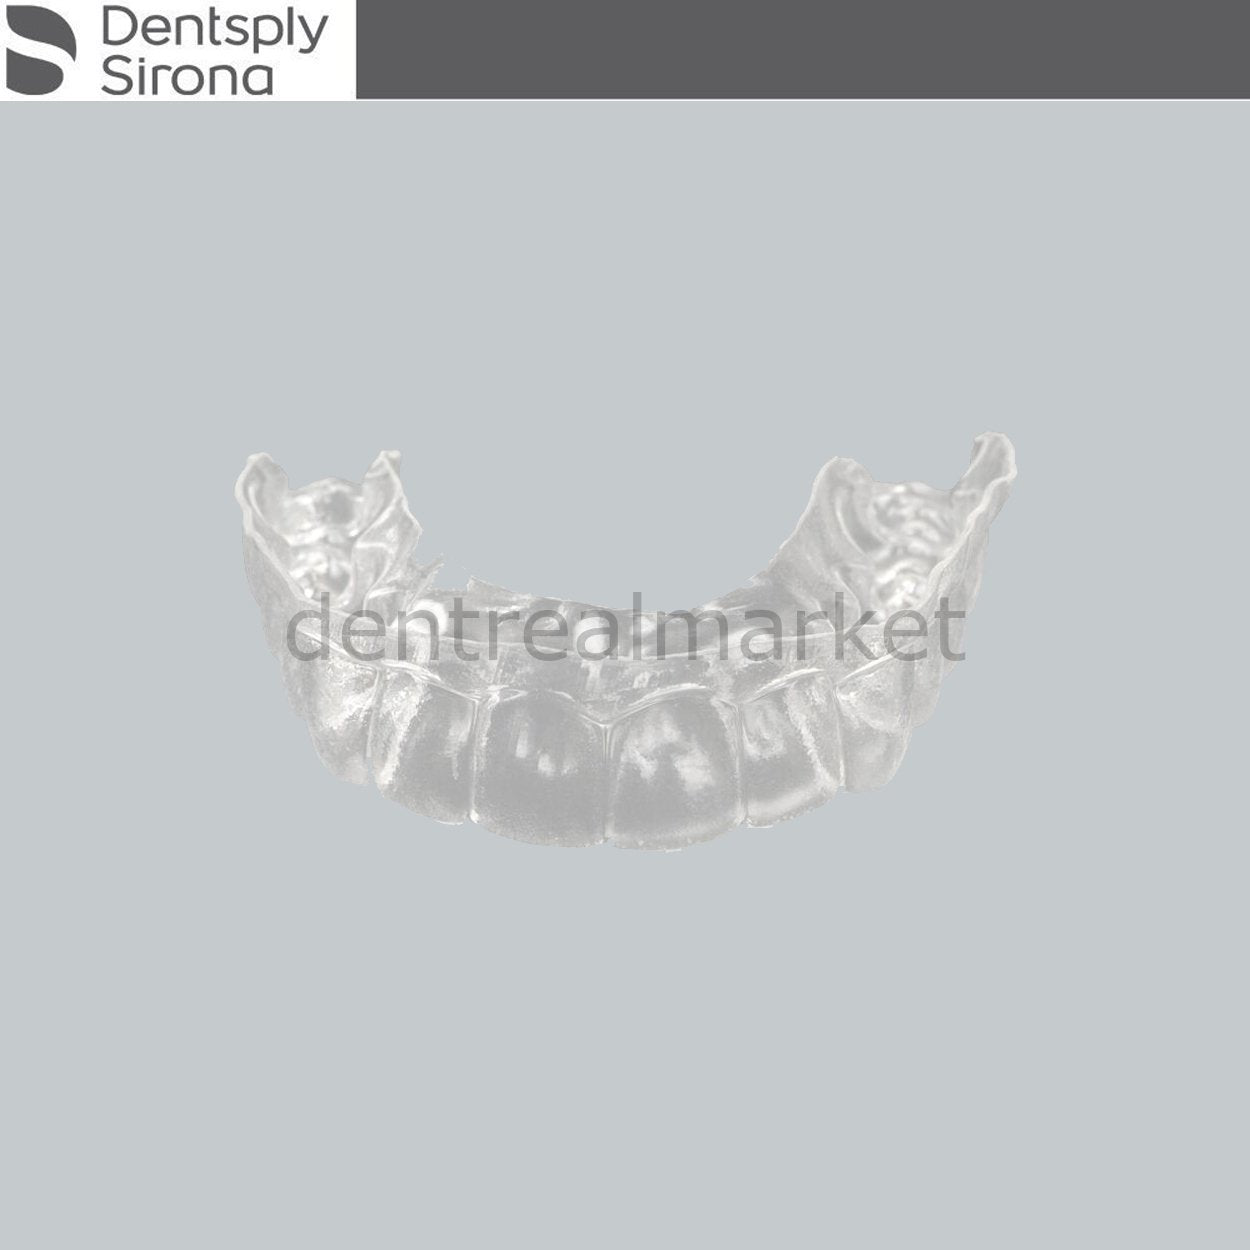 DentrealStore - Dentsply-Sirona Orthodontic Essix A+ Plastic - 040" - Circle 125 mm